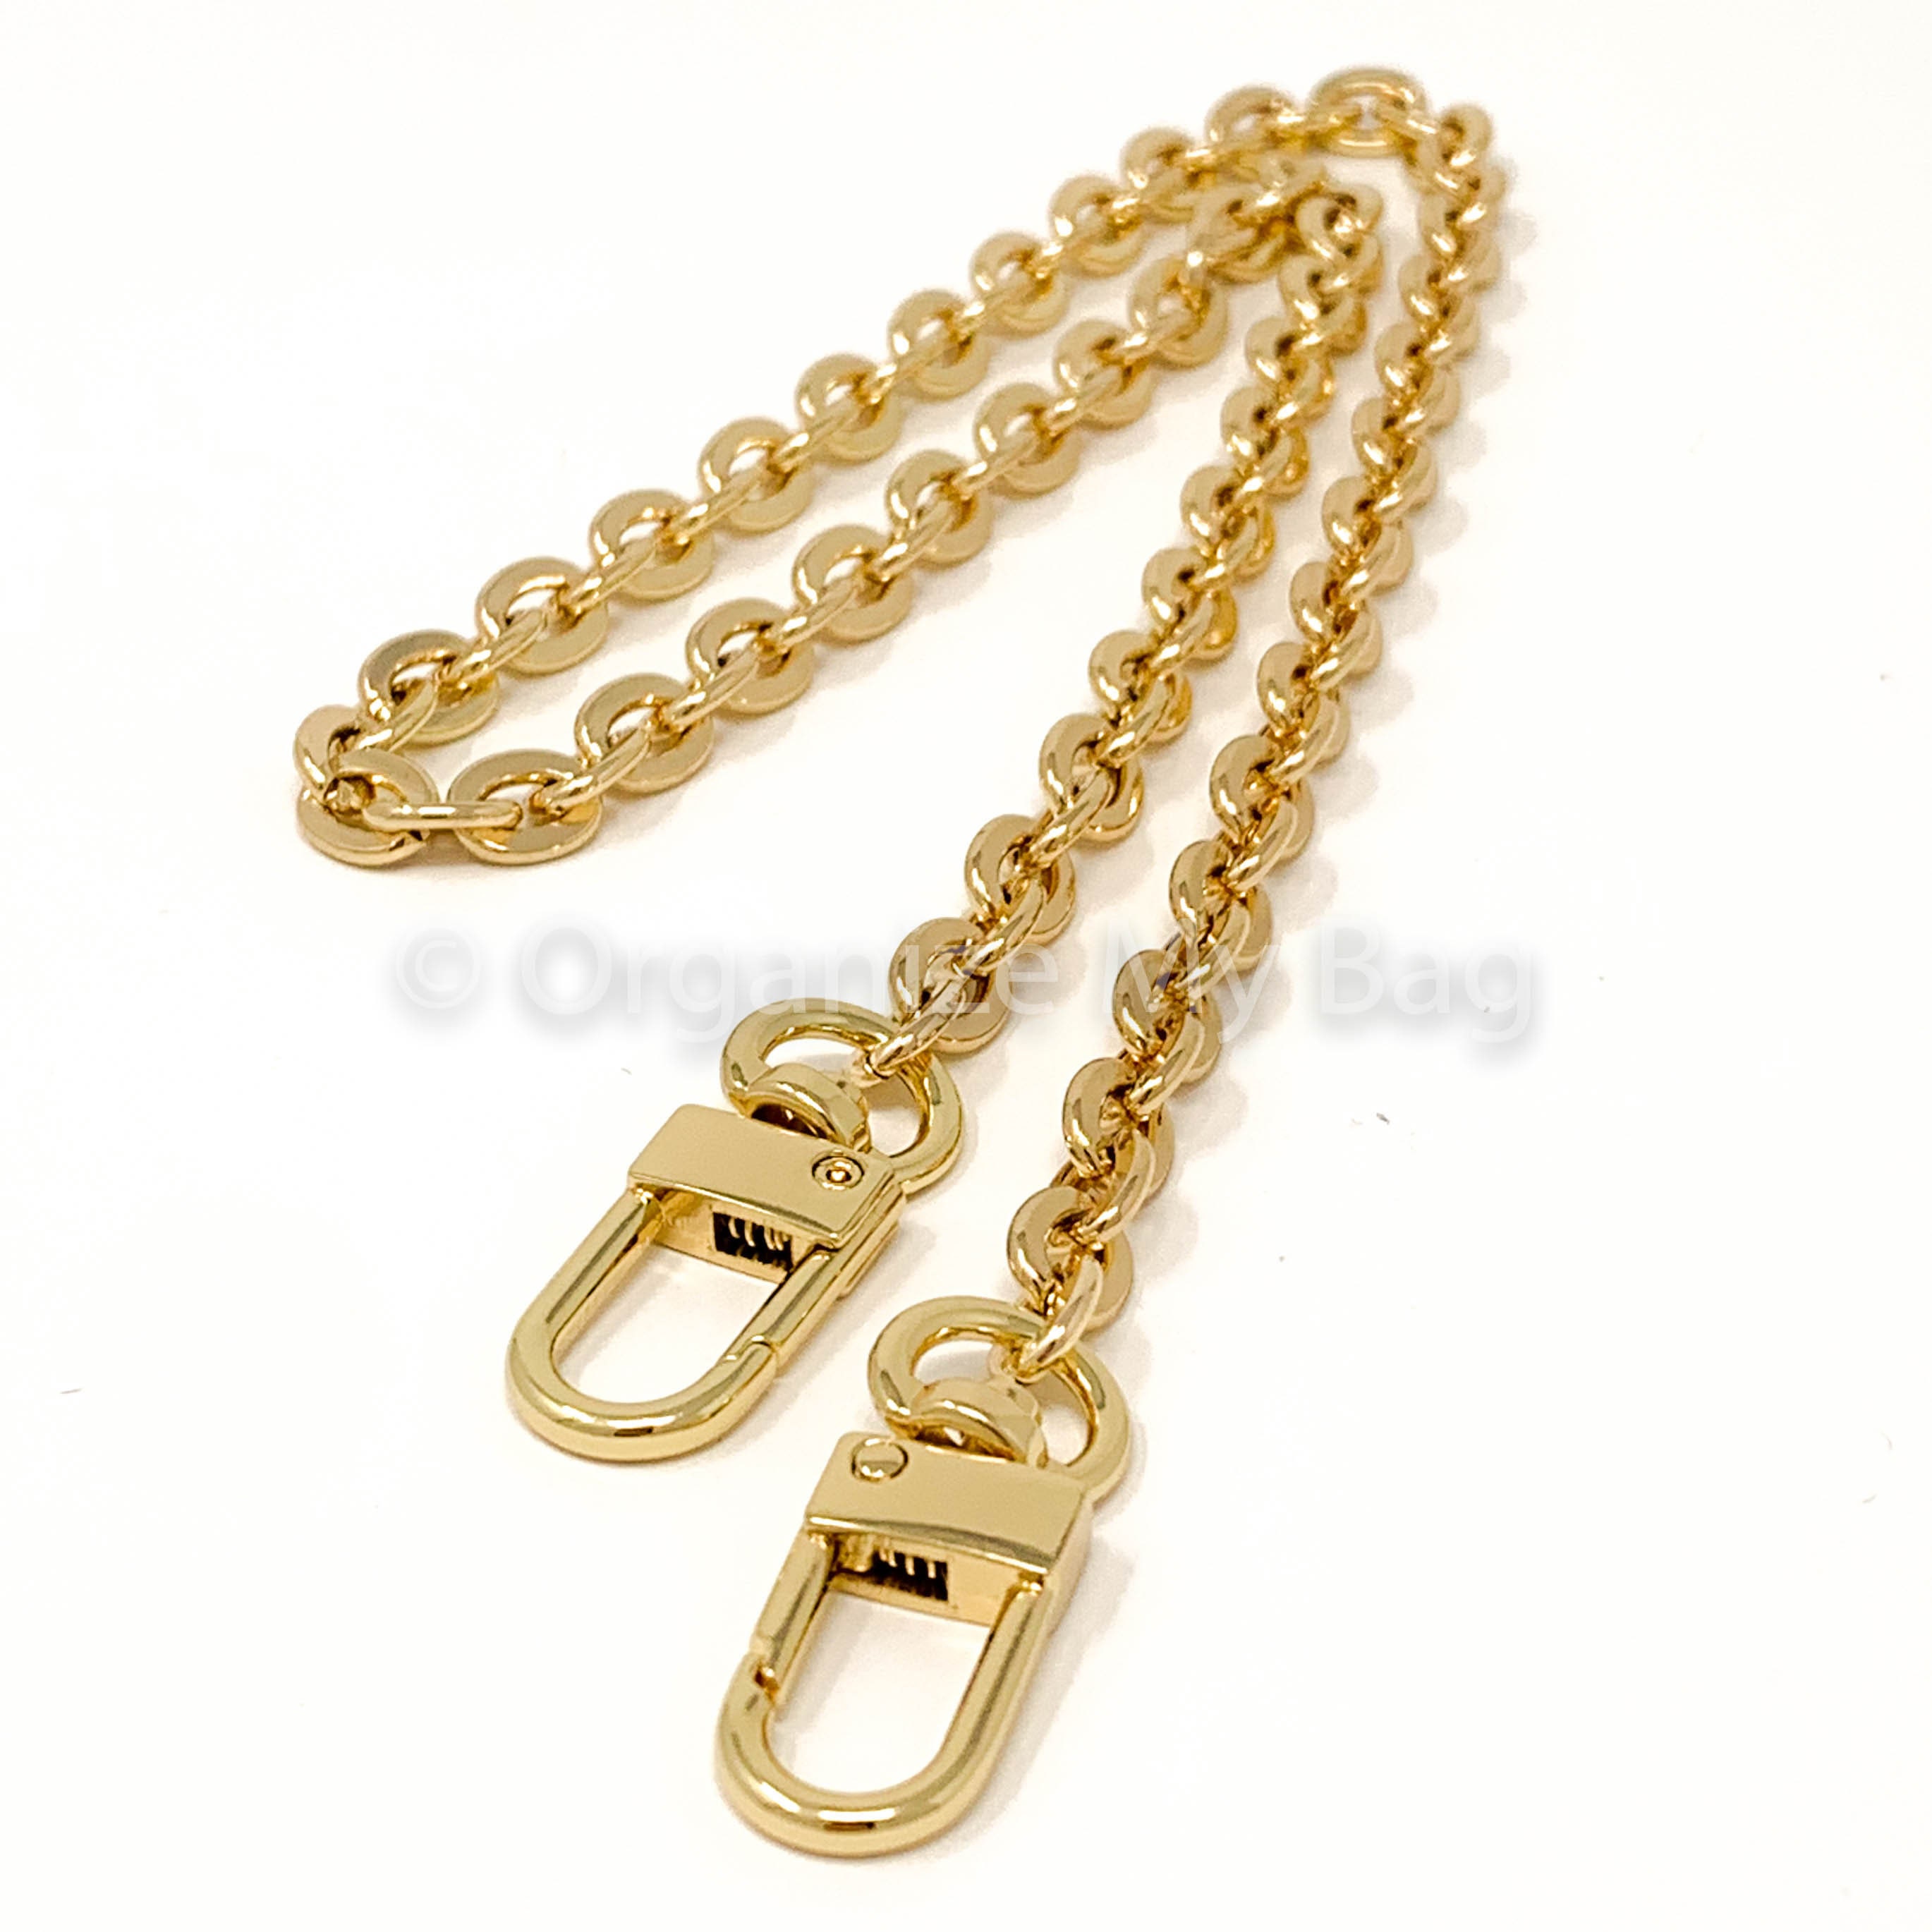 Louis Vuitton Chain Shoulder Strap in Golden Brass from a Pochette Félicie  - SOLD